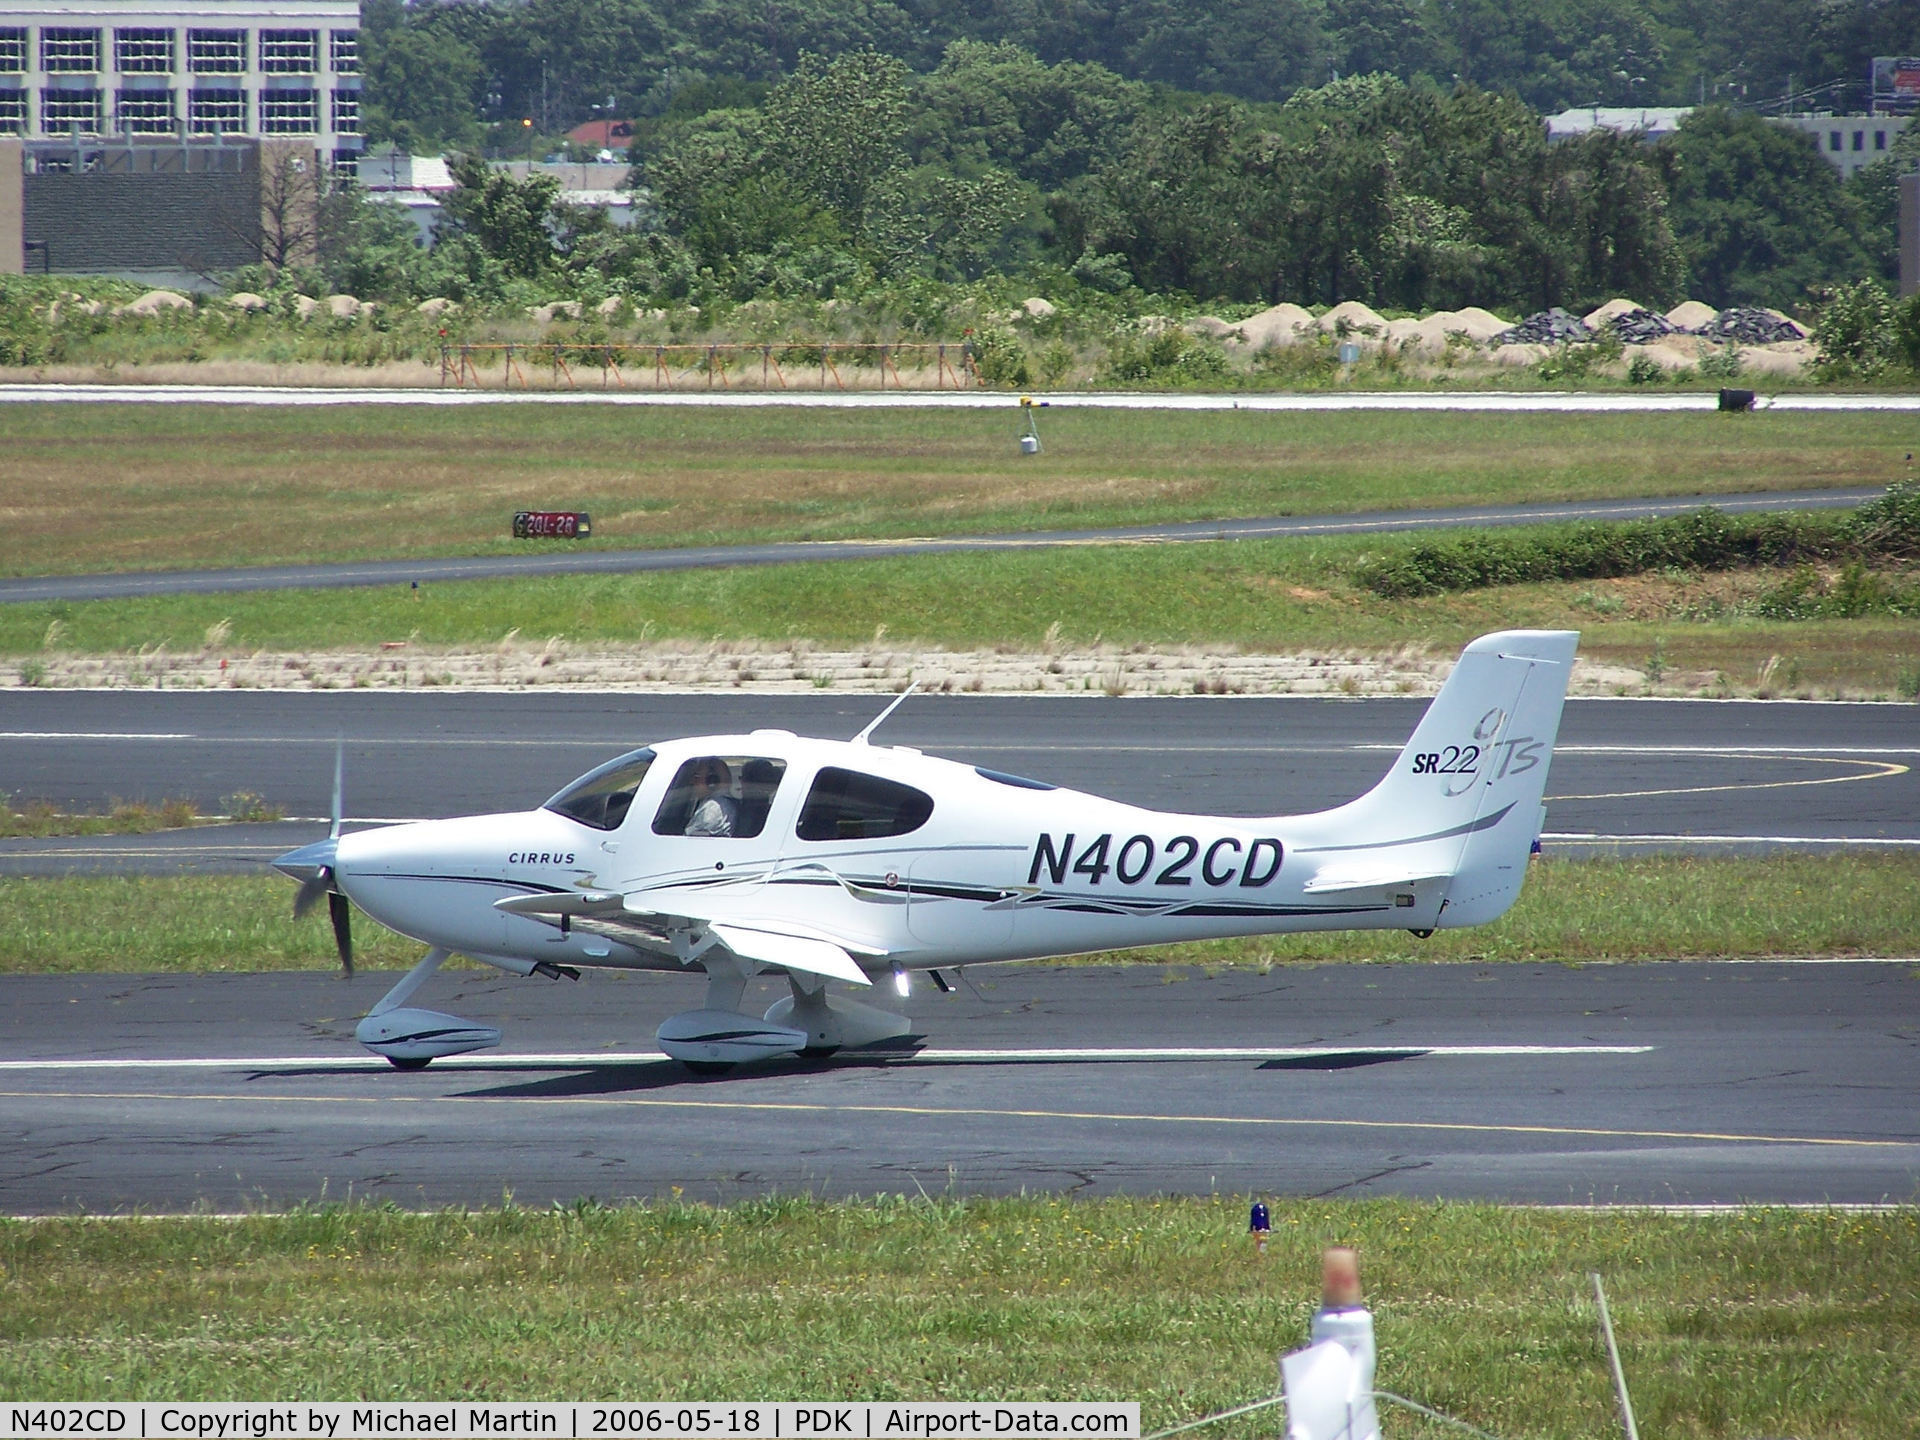 N402CD, 2005 Cirrus SR22 GTS C/N 1431, Taxing to Epps Air Service